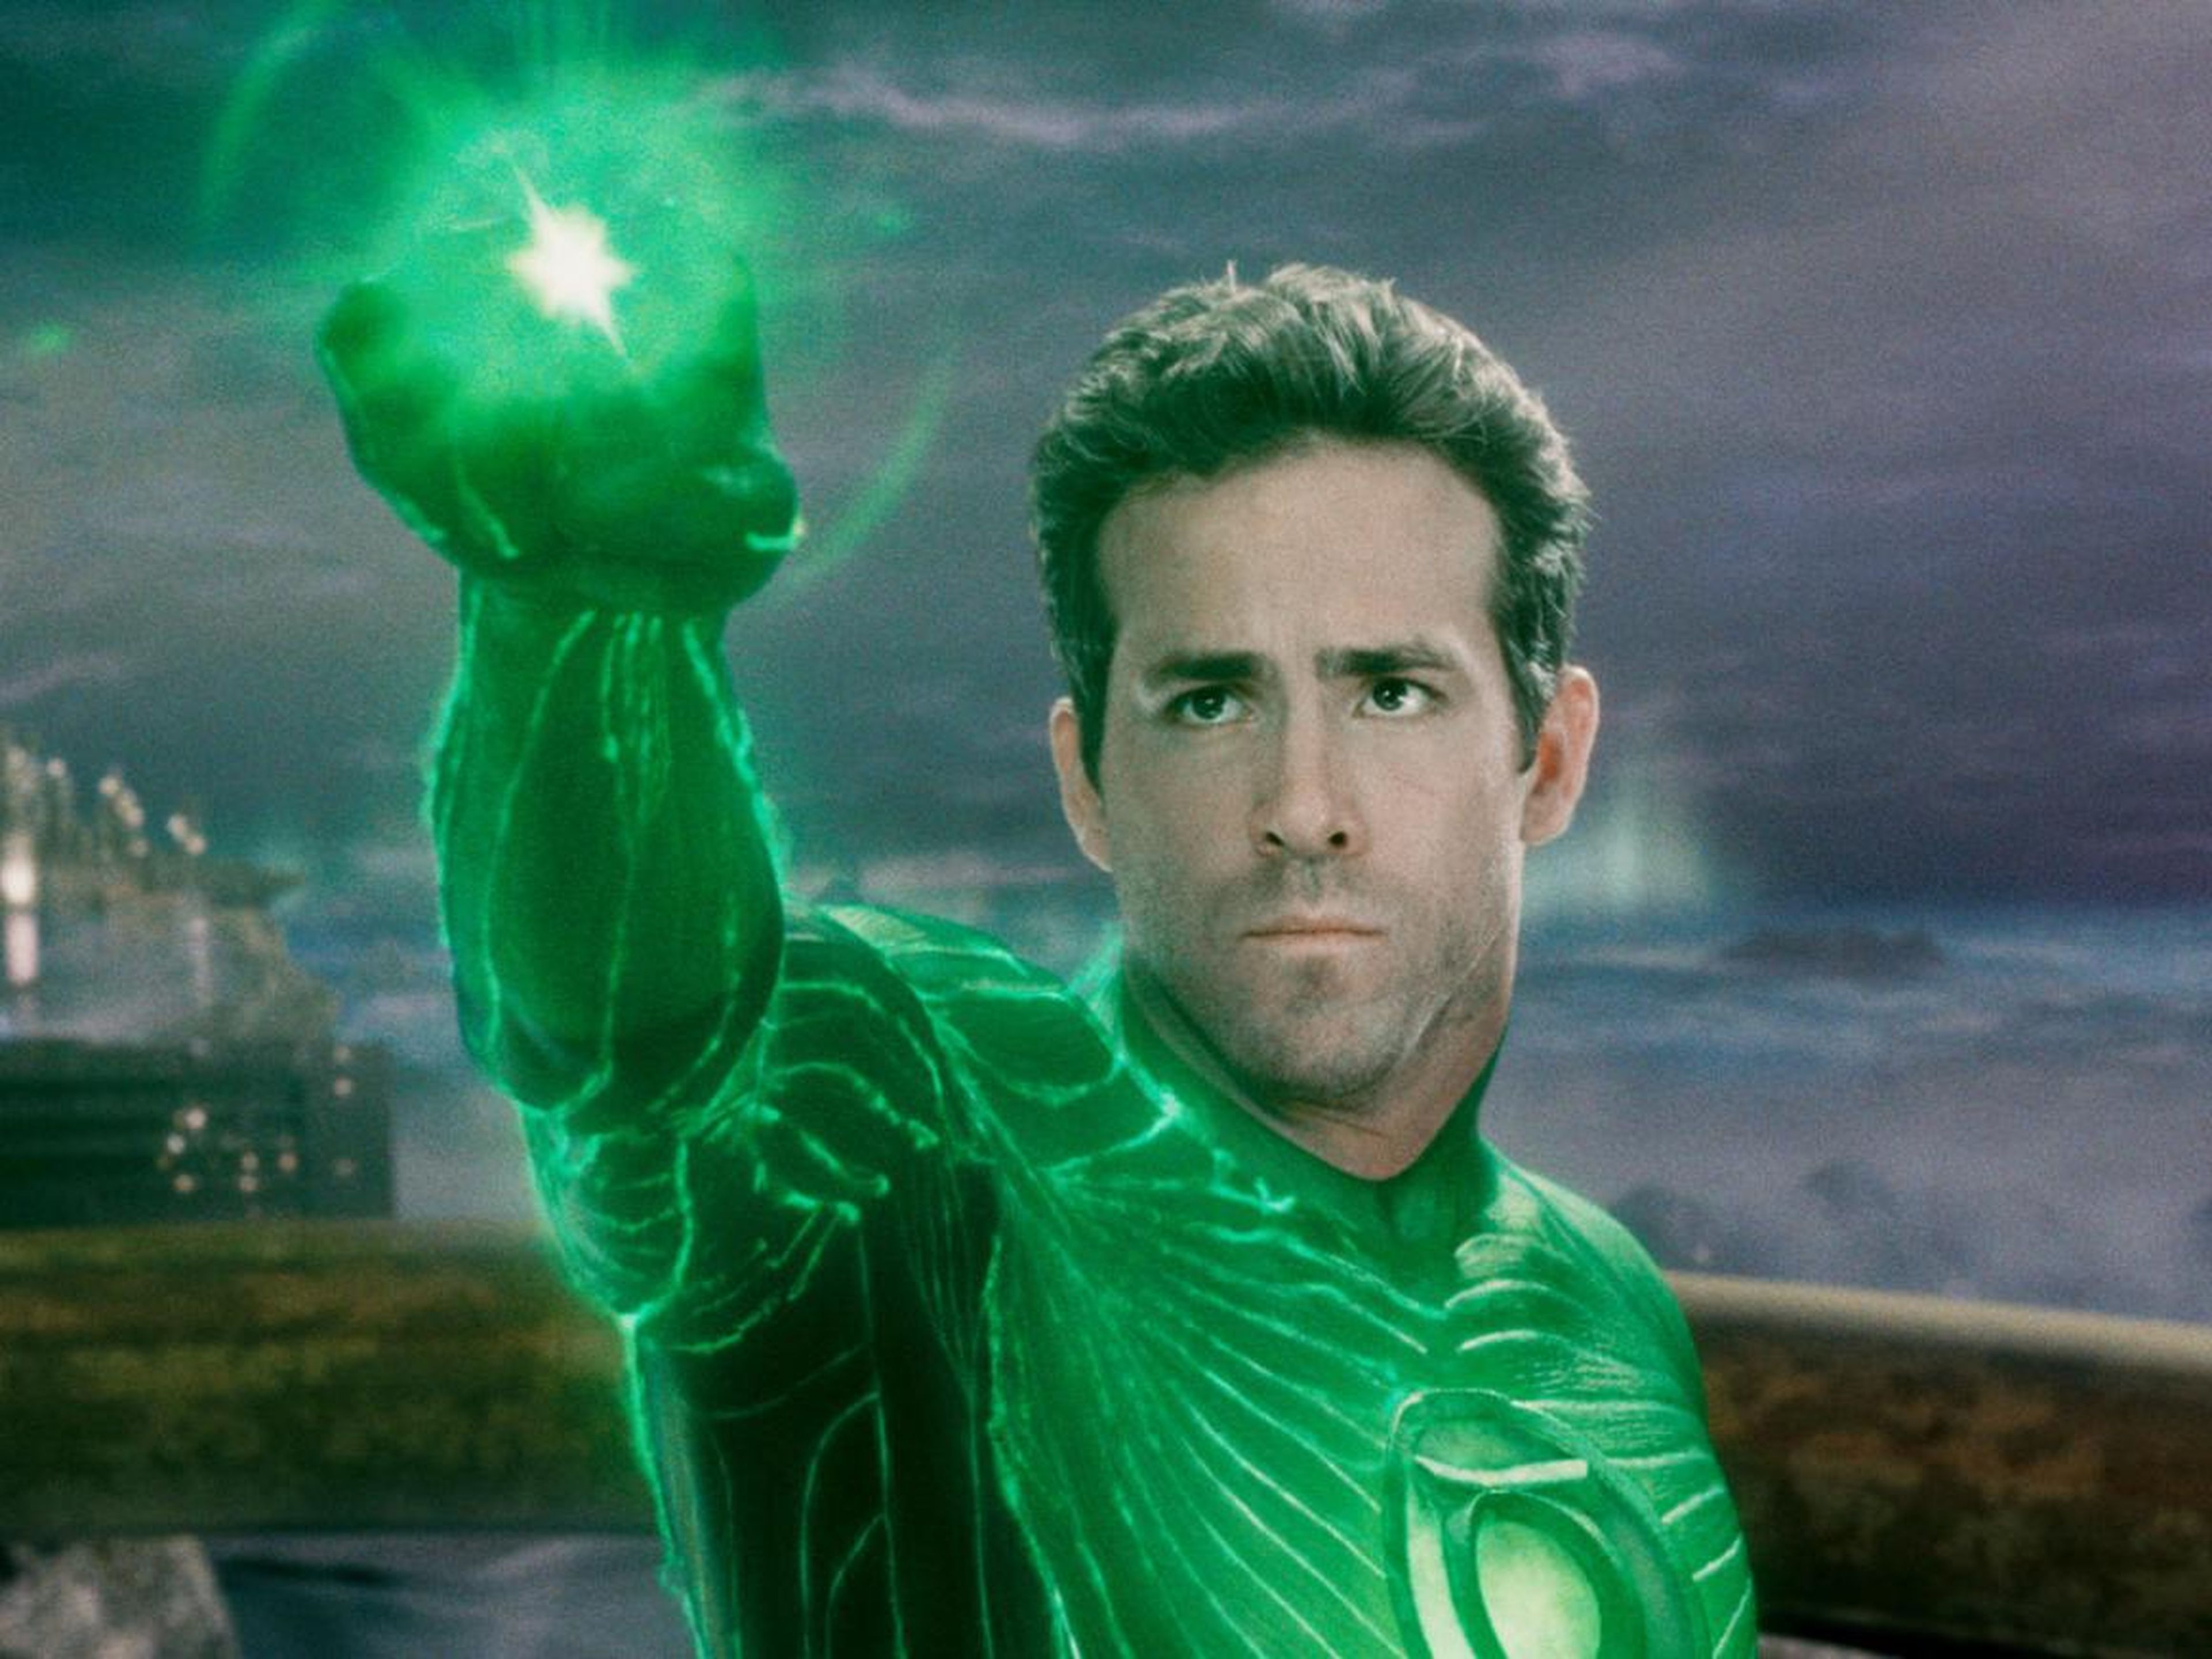 "The Green Lantern" was so bad even Ryan Reynolds said he regrets it.